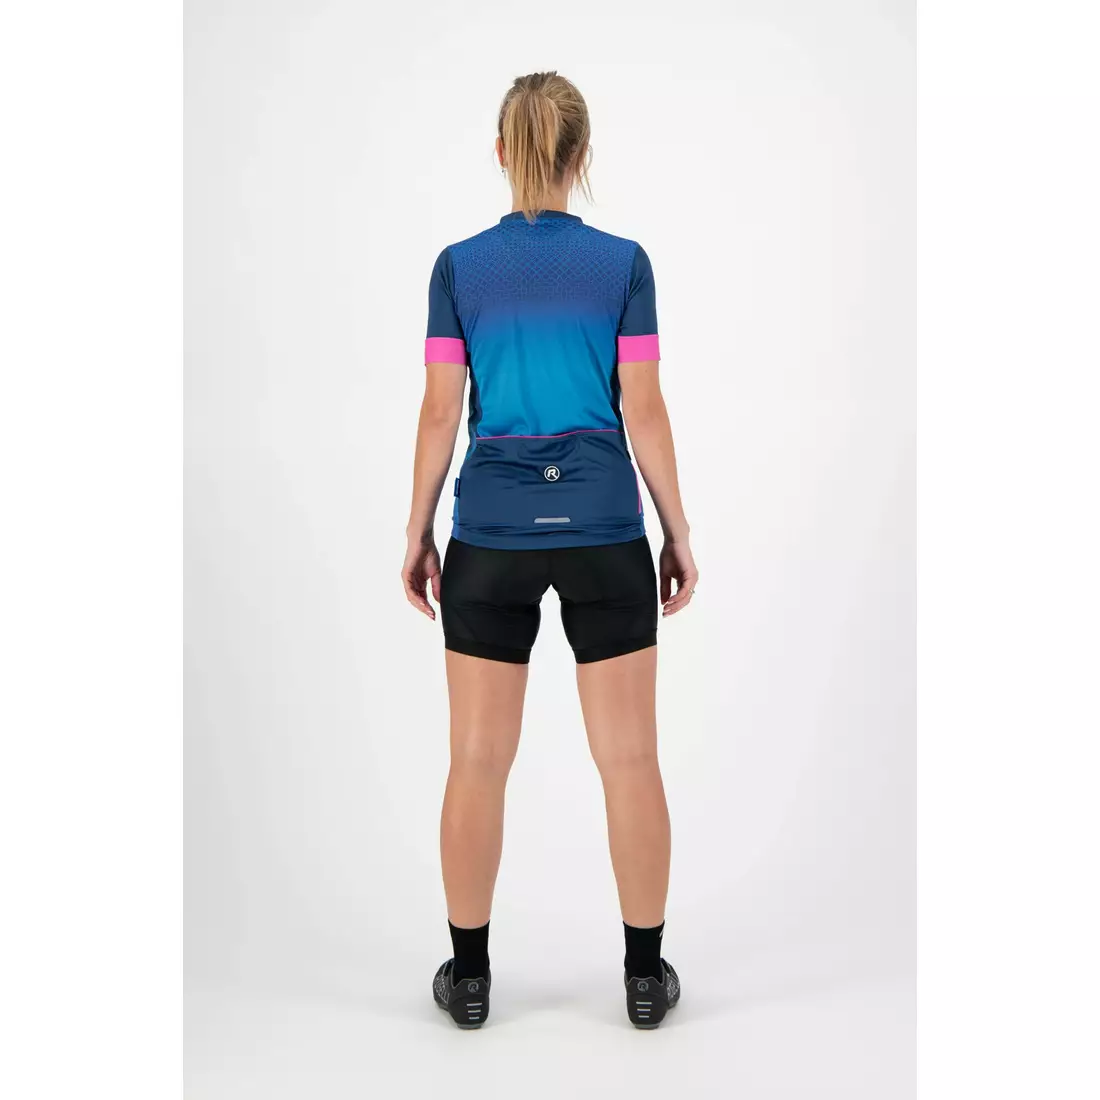 ROGELLI dámský cyklistický dres LUX blue 010.189